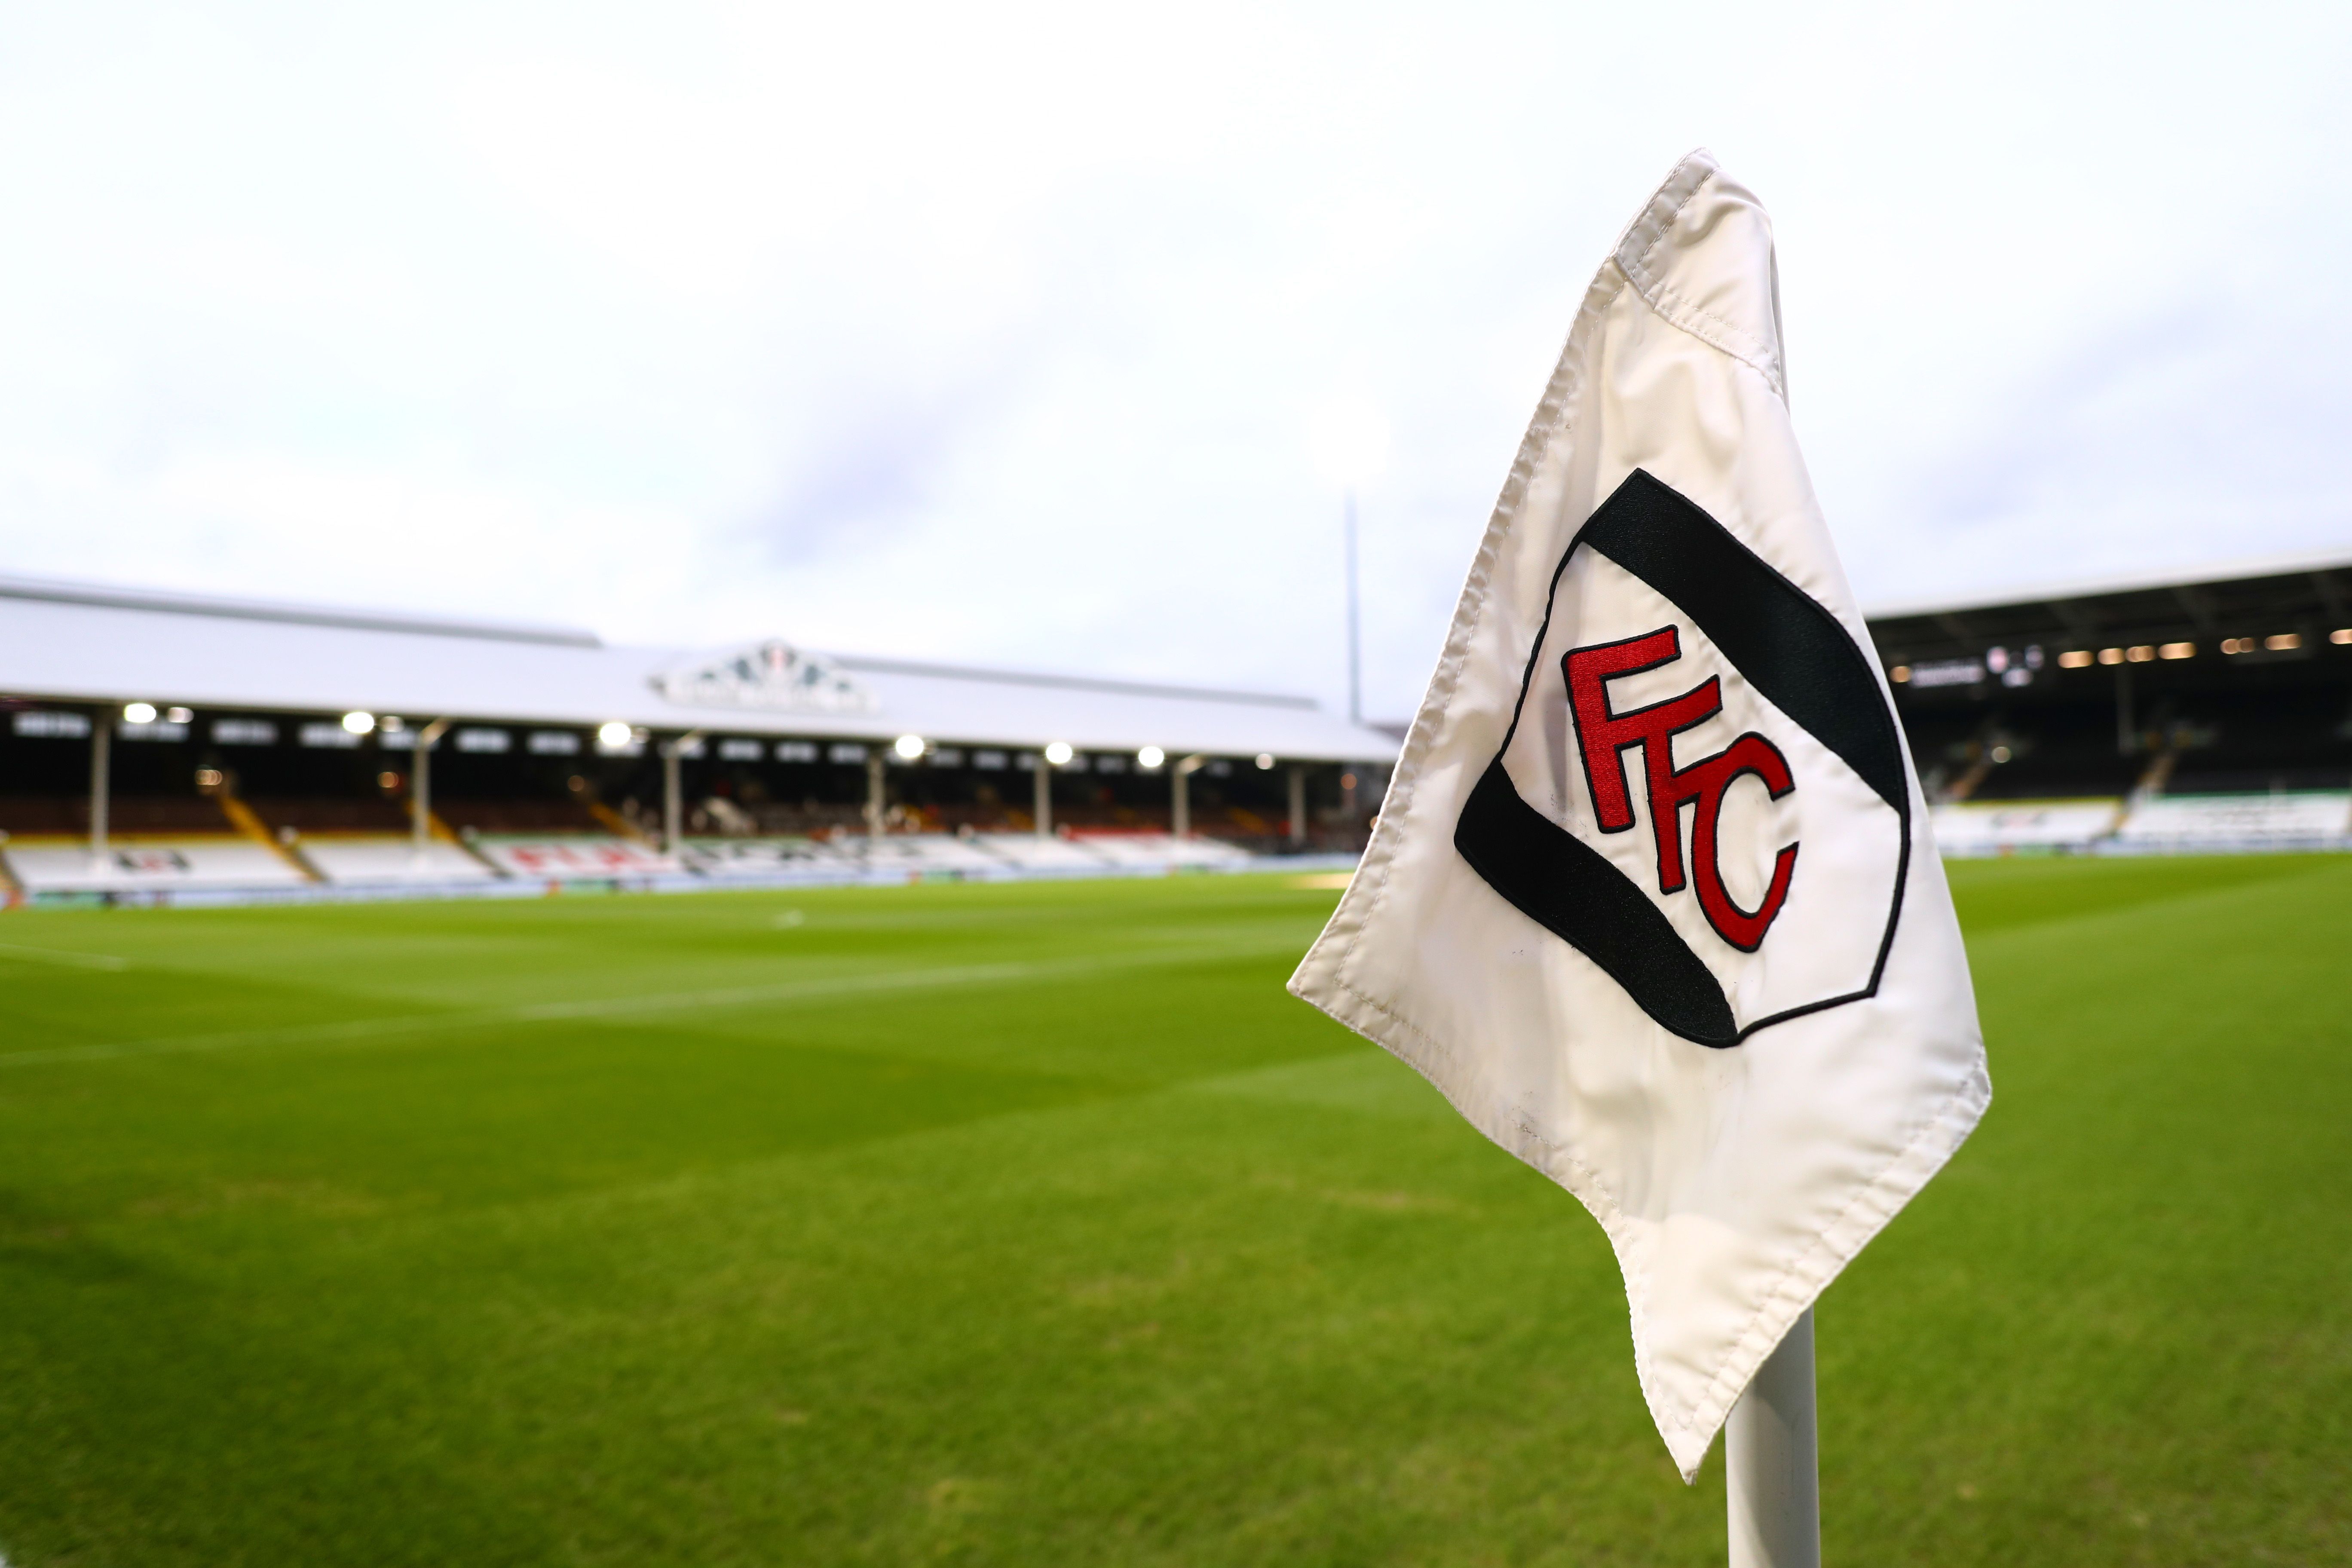 Fulham's badge on a corner flag.